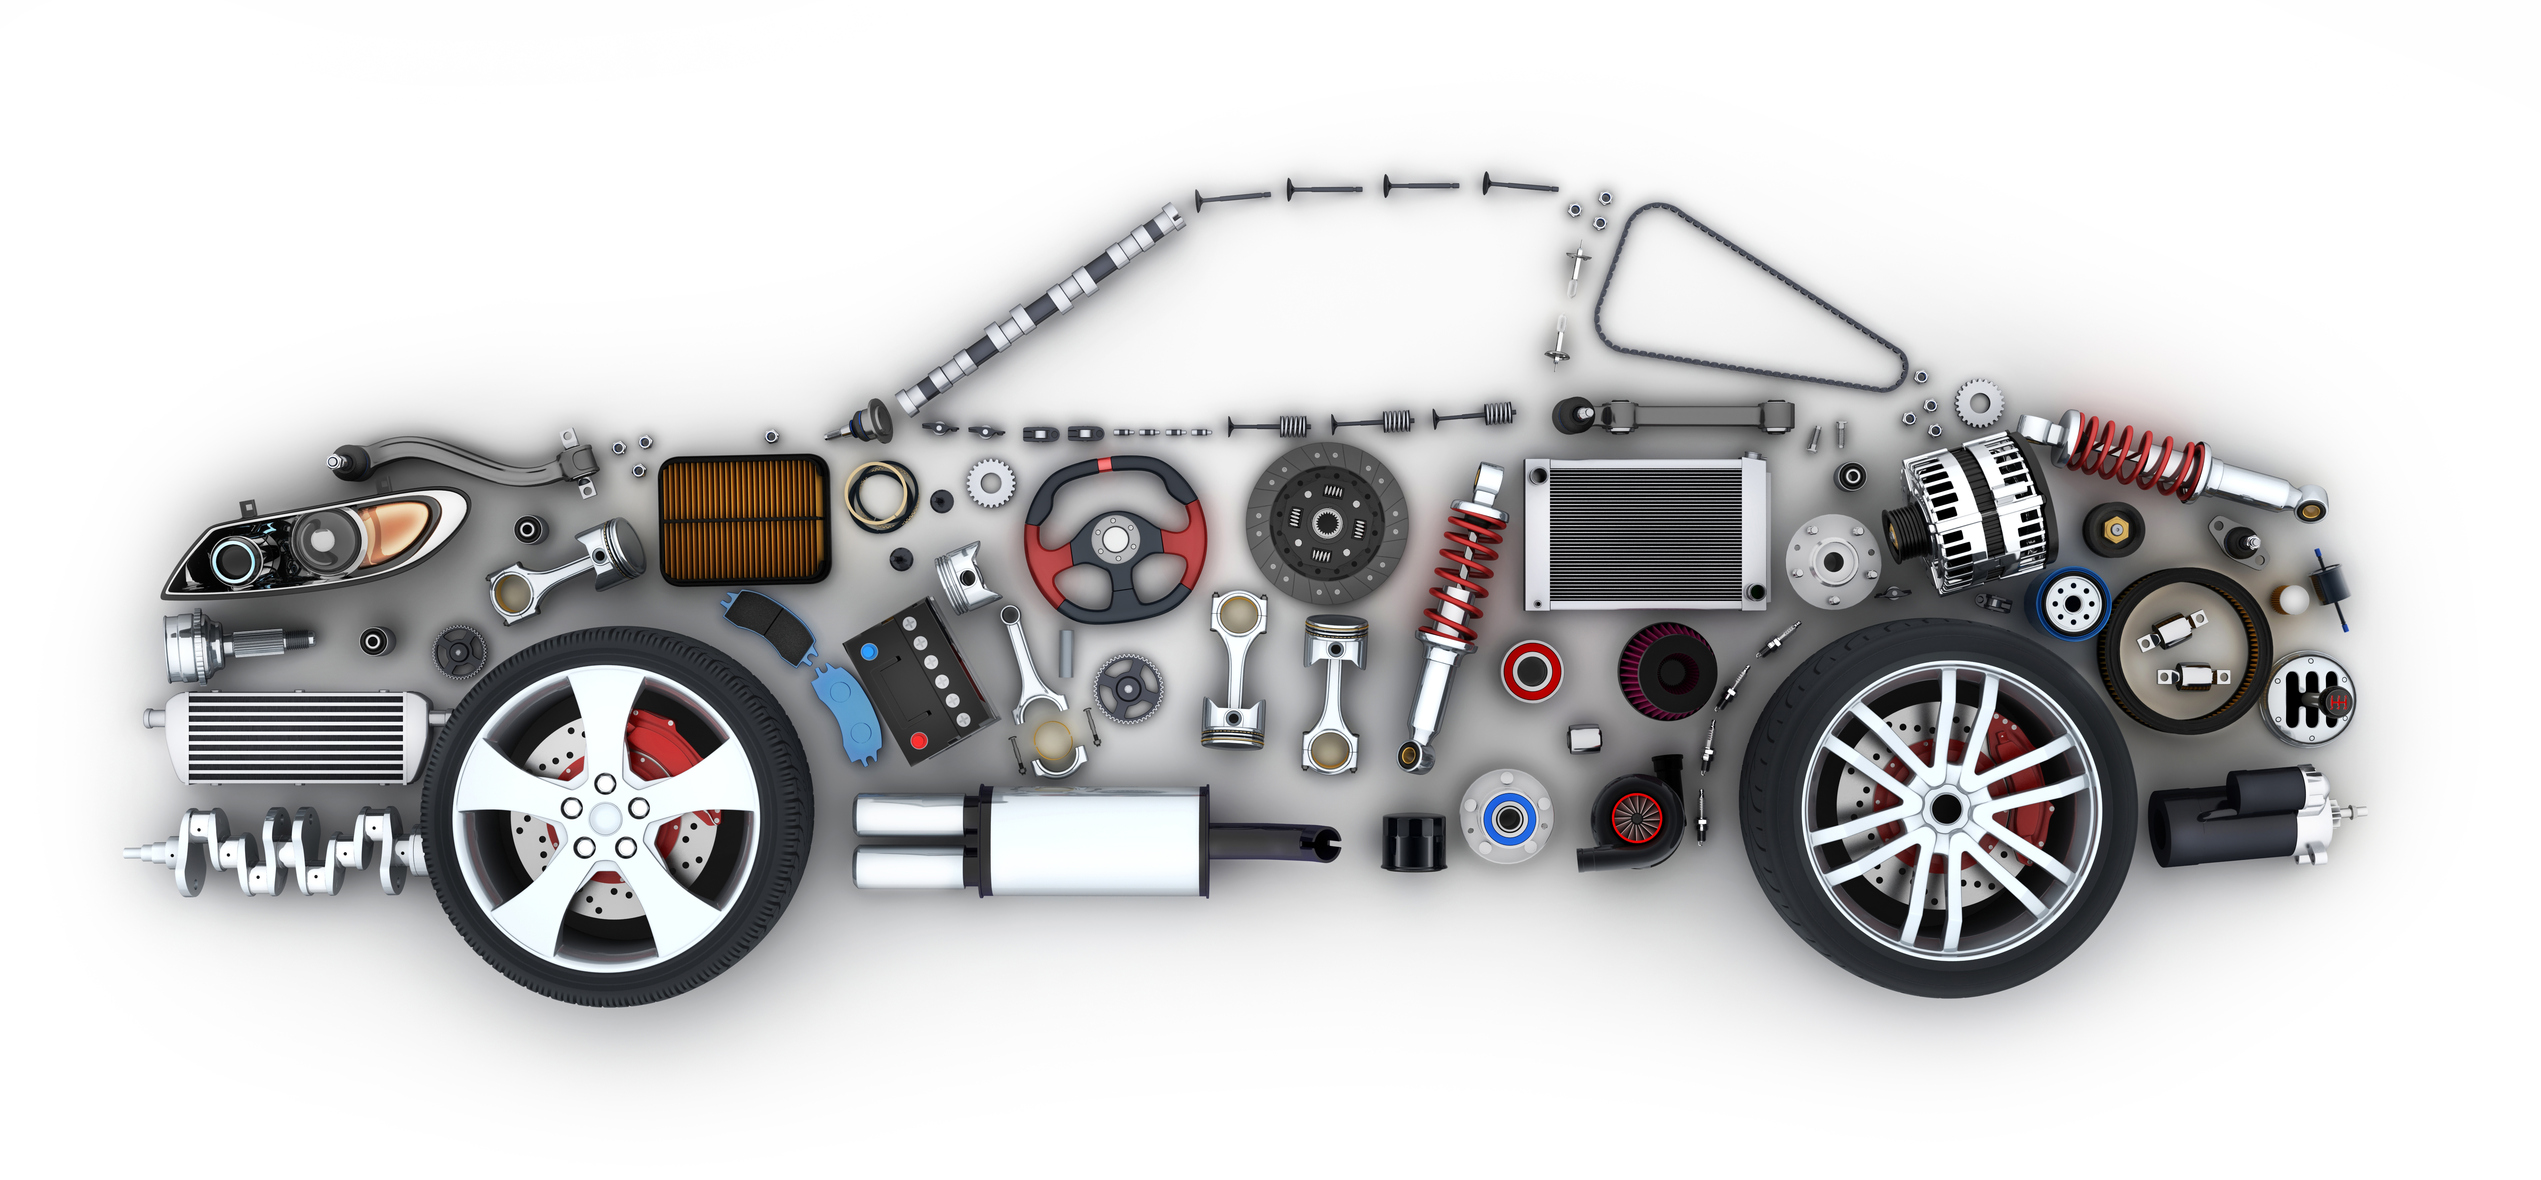 Motors: Auto Parts and Vehicles